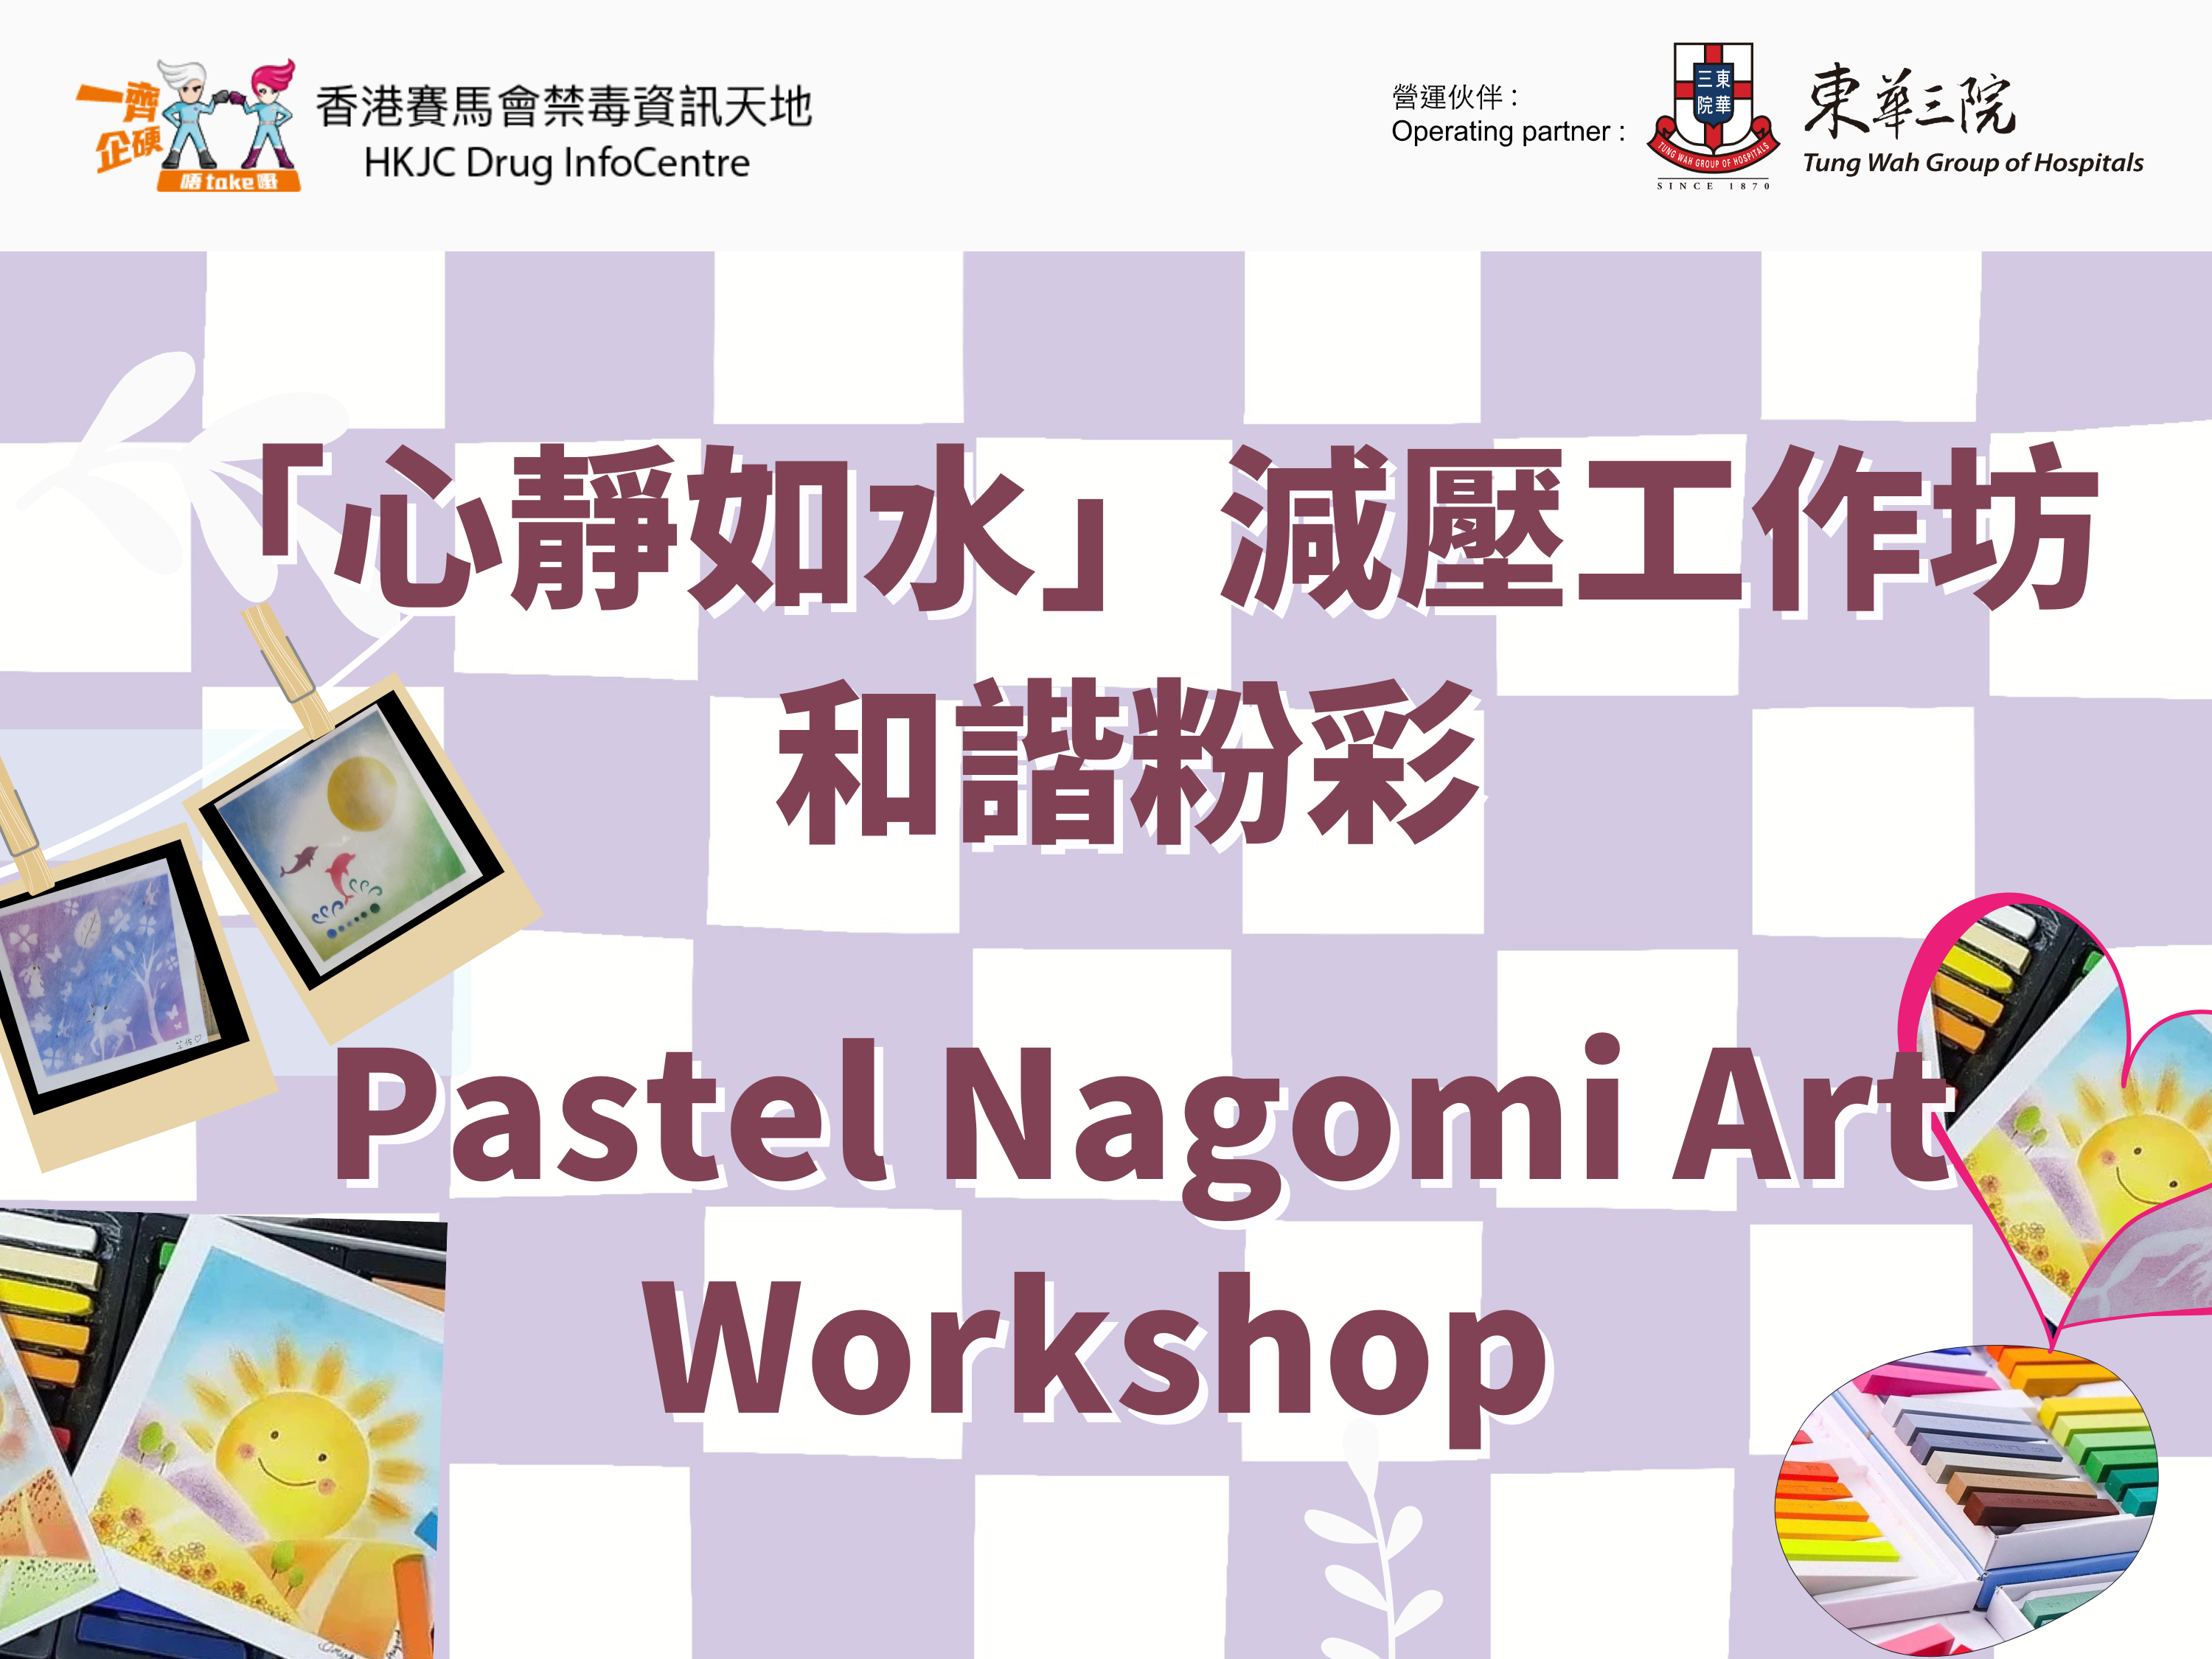 Pastel Nagomi Art Workshop 